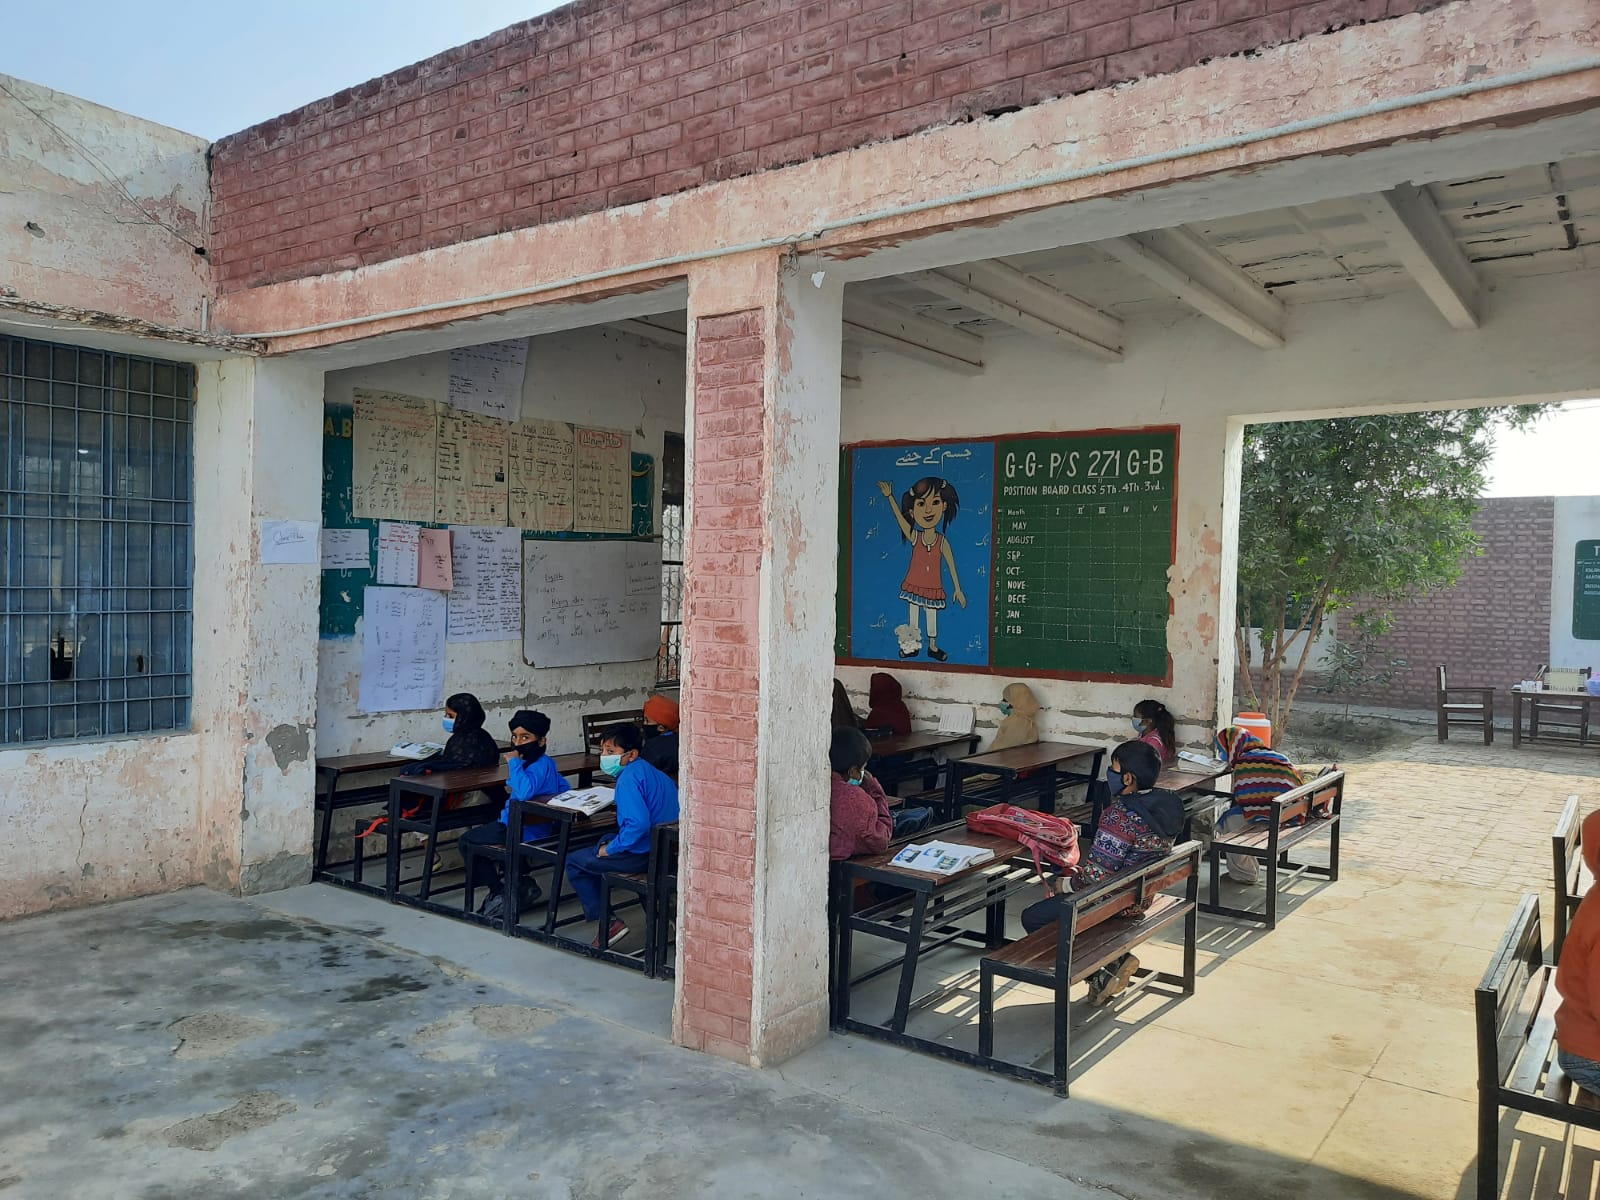 2021 Govt. Primary School 271GB, Toba Tek Singh, Pakistan